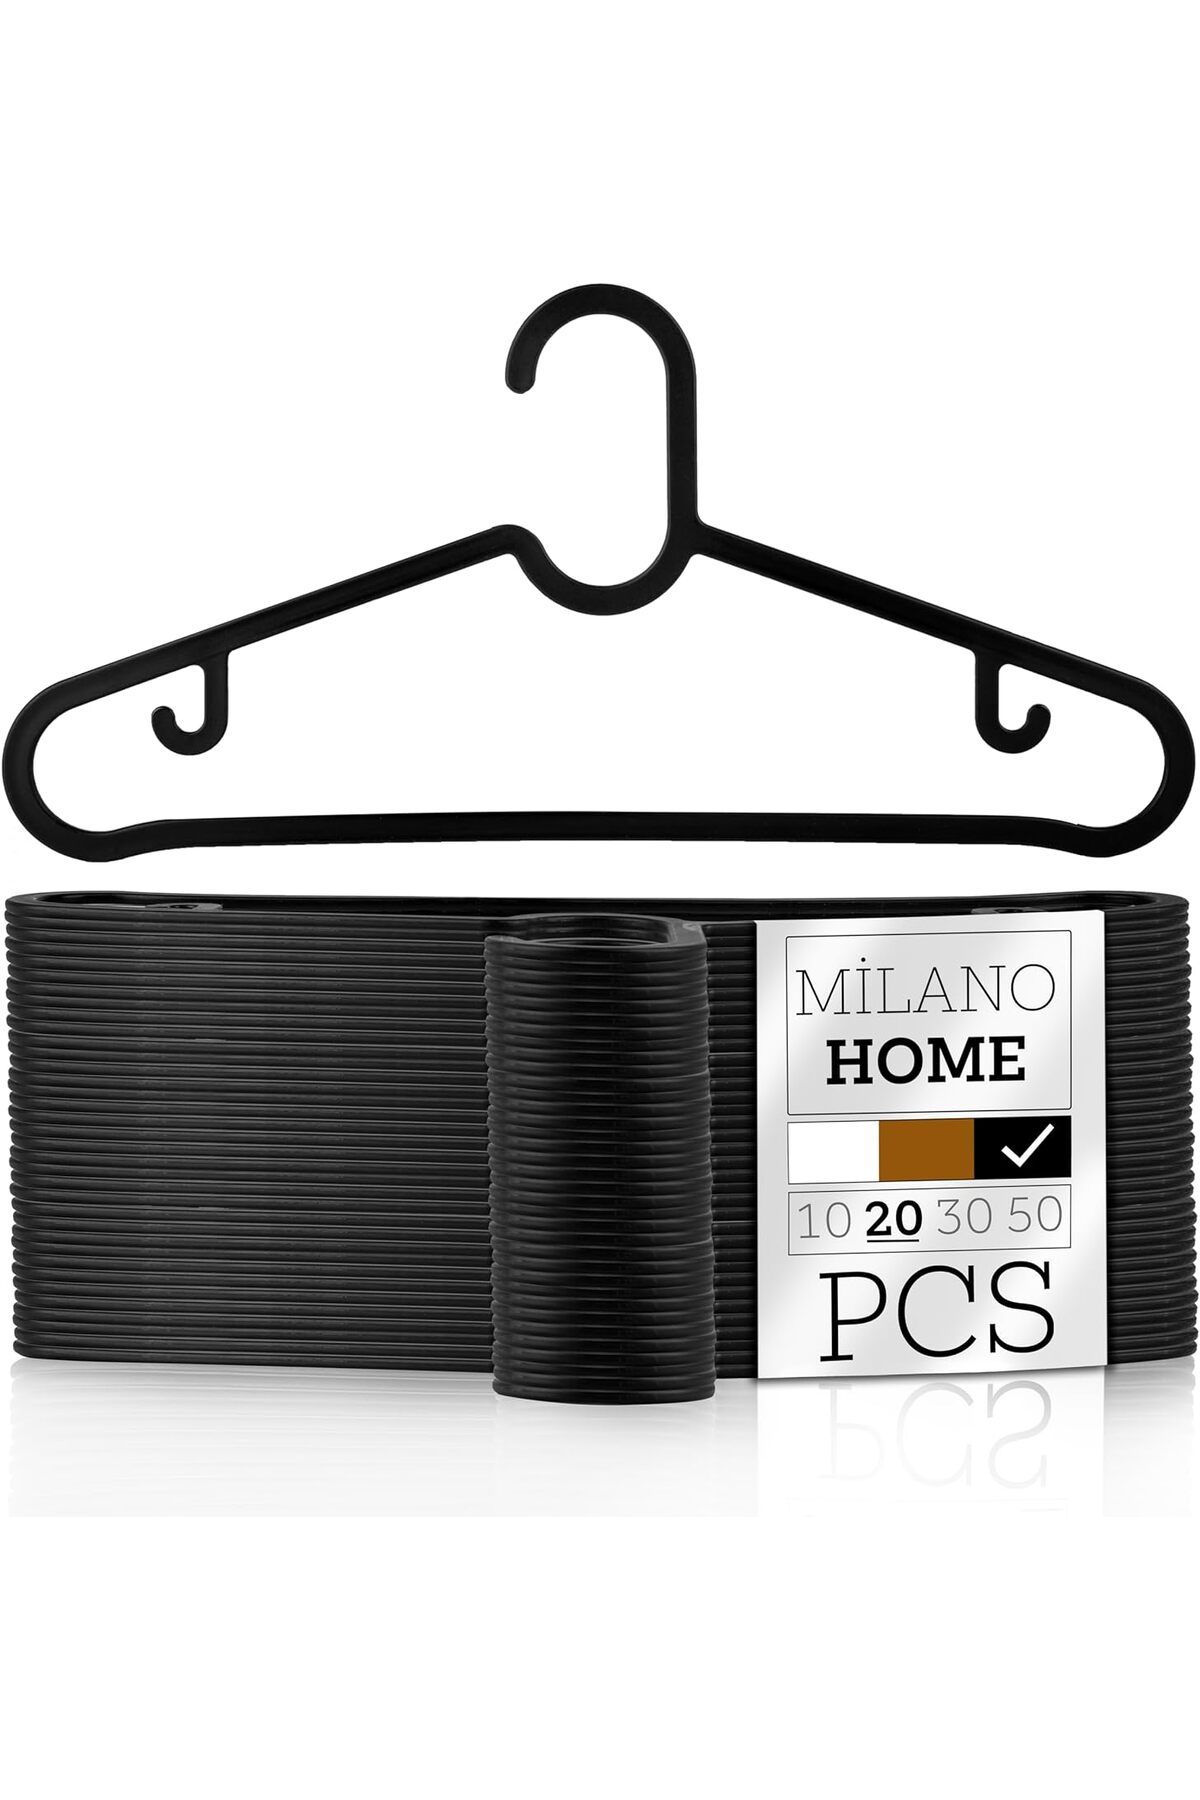 Store home - Plastik Elbise Askısı, Siyah Elbise Askısı, Gömlek Askısı, Dolap İçi Askı, Yer Kapl